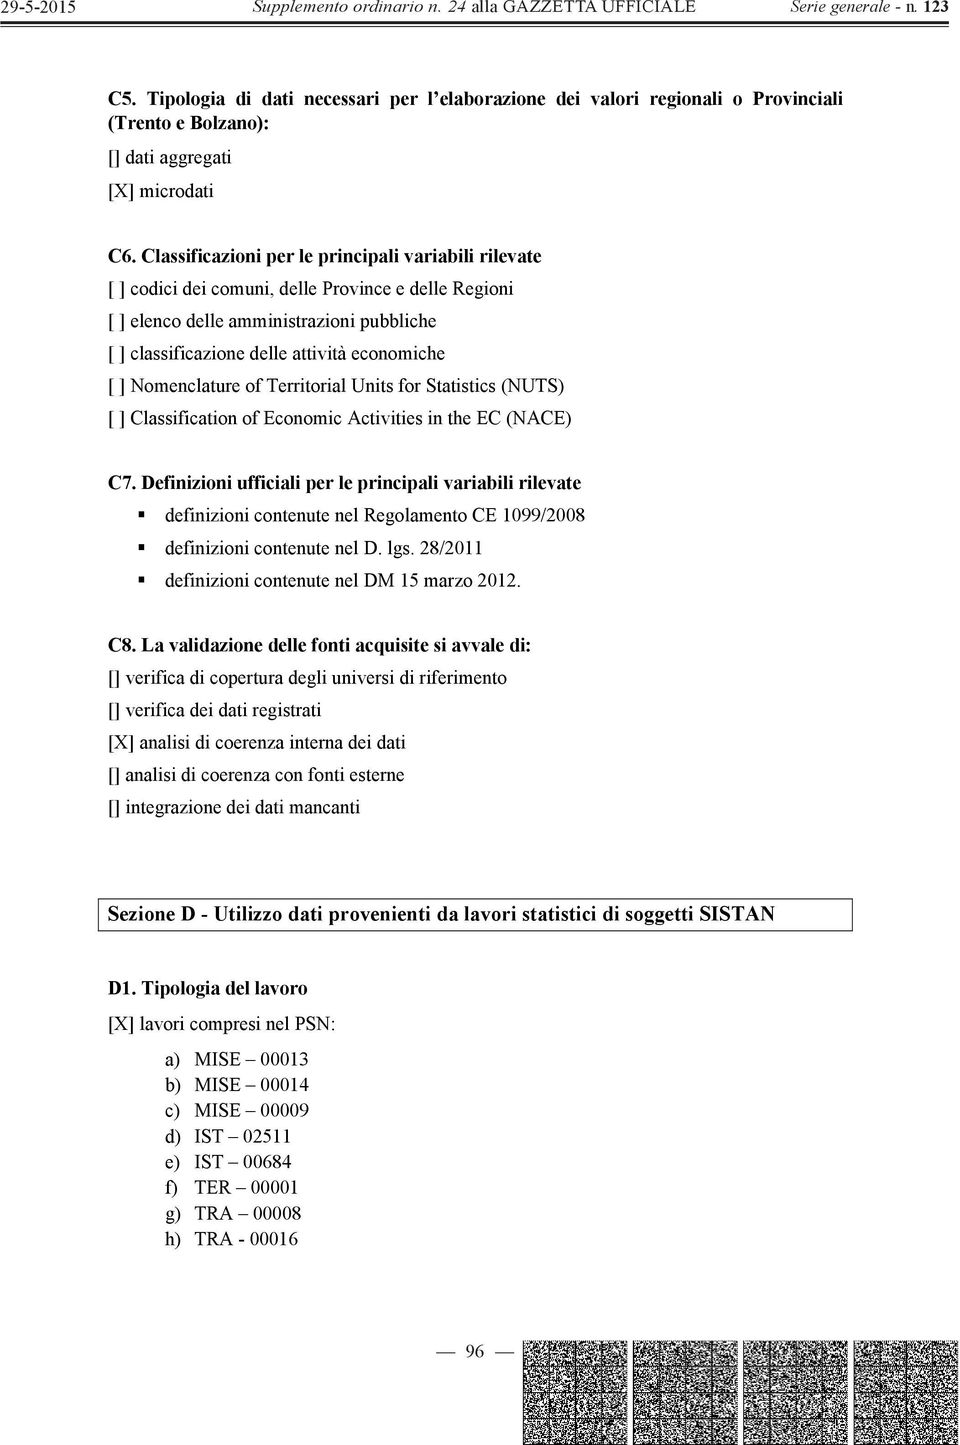 Nomenclature of Territorial Units for Statistics (NUTS) [ ] Classification of Economic Activities in the EC (NACE) C7.